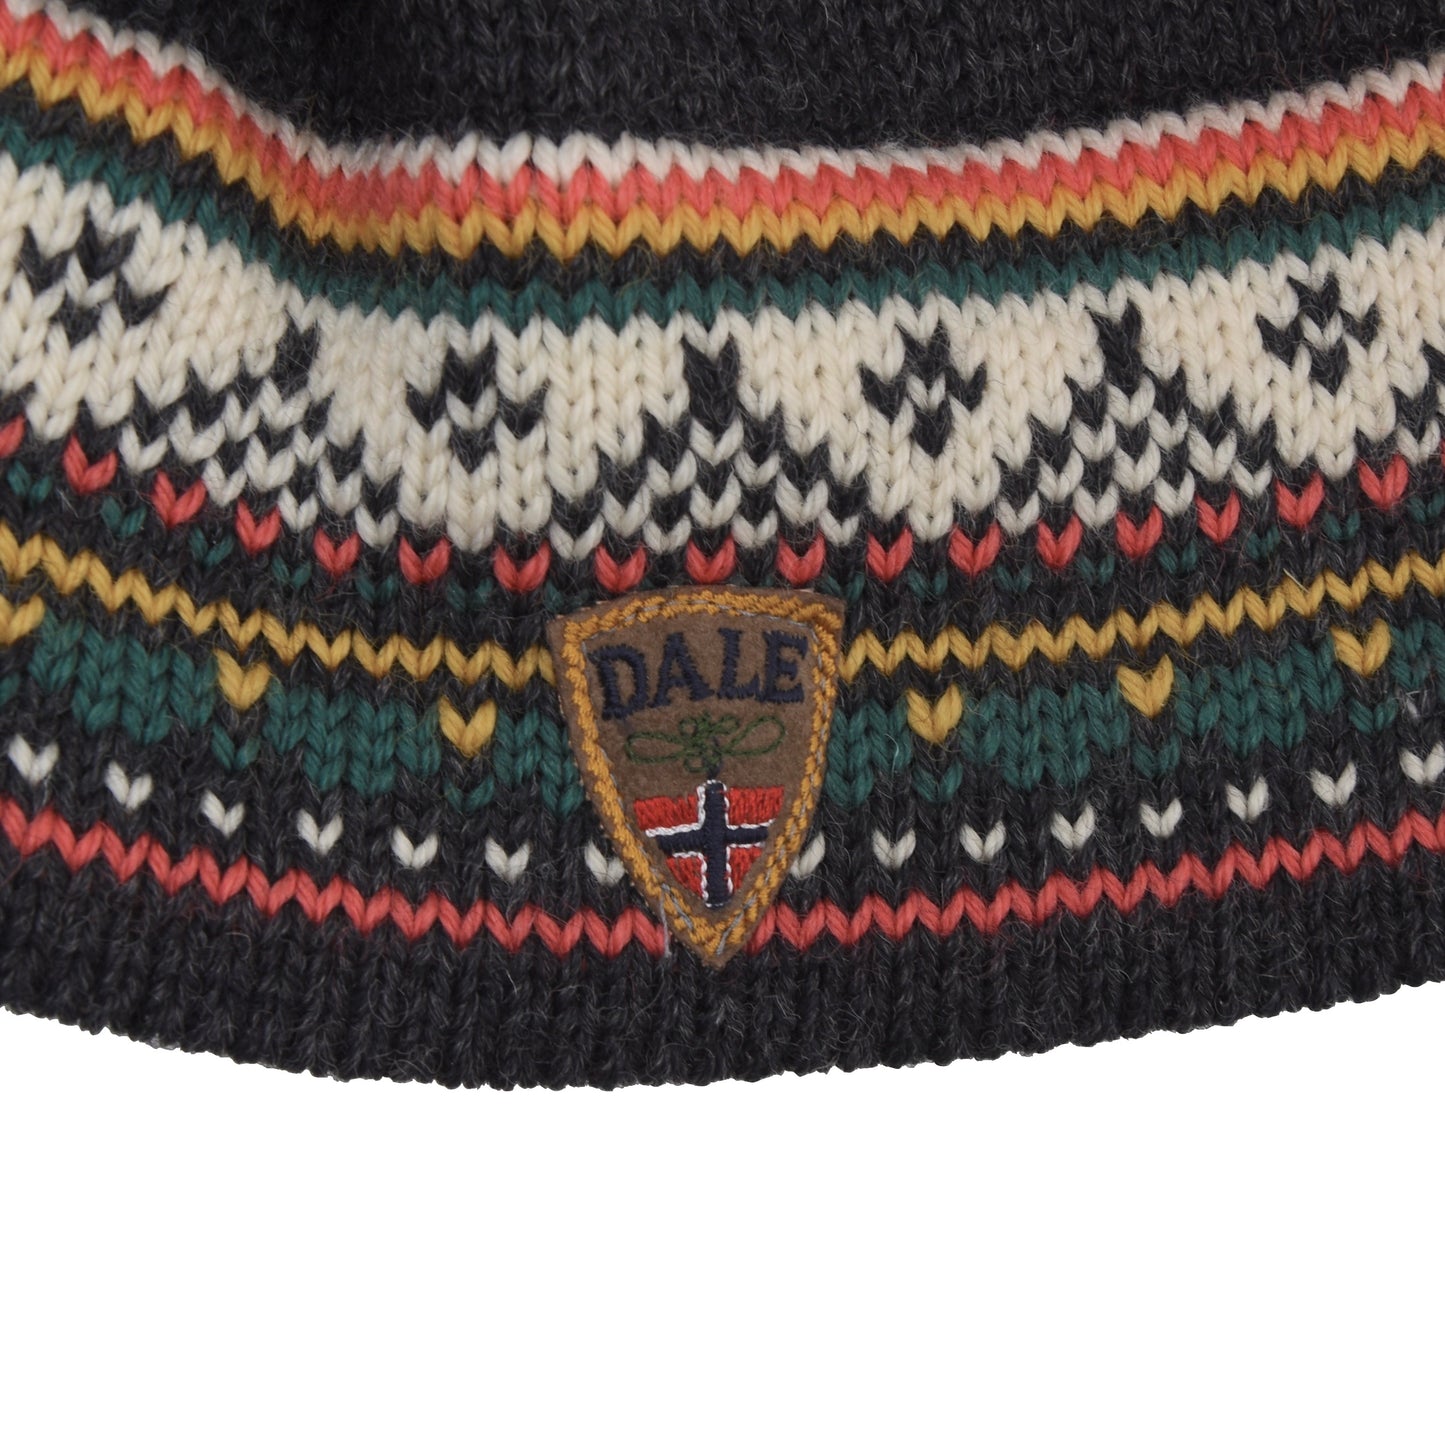 Dale of Norway Wool Stocking Cap/Hat